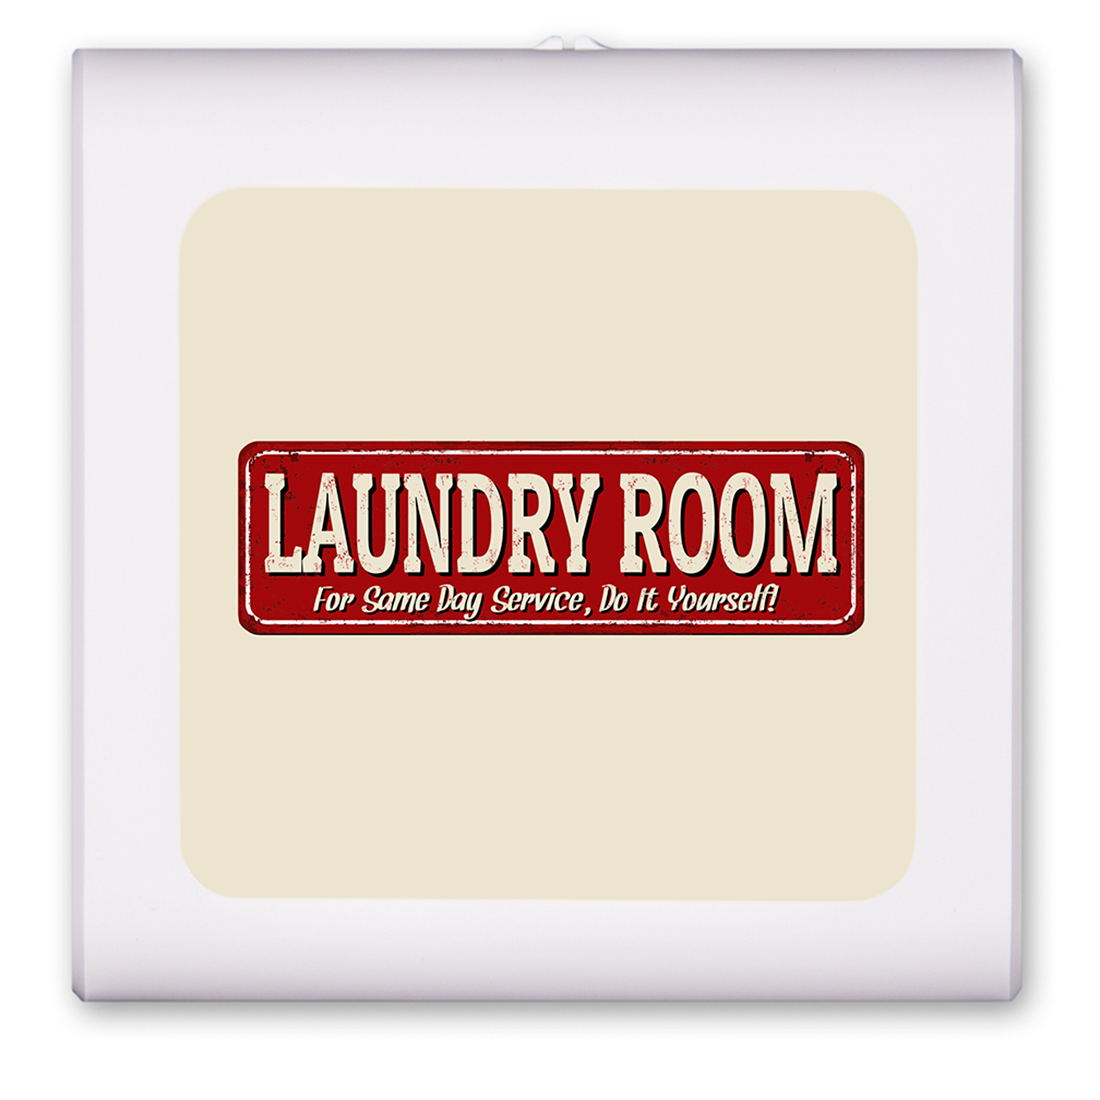 Laundry Room 2 - #2620